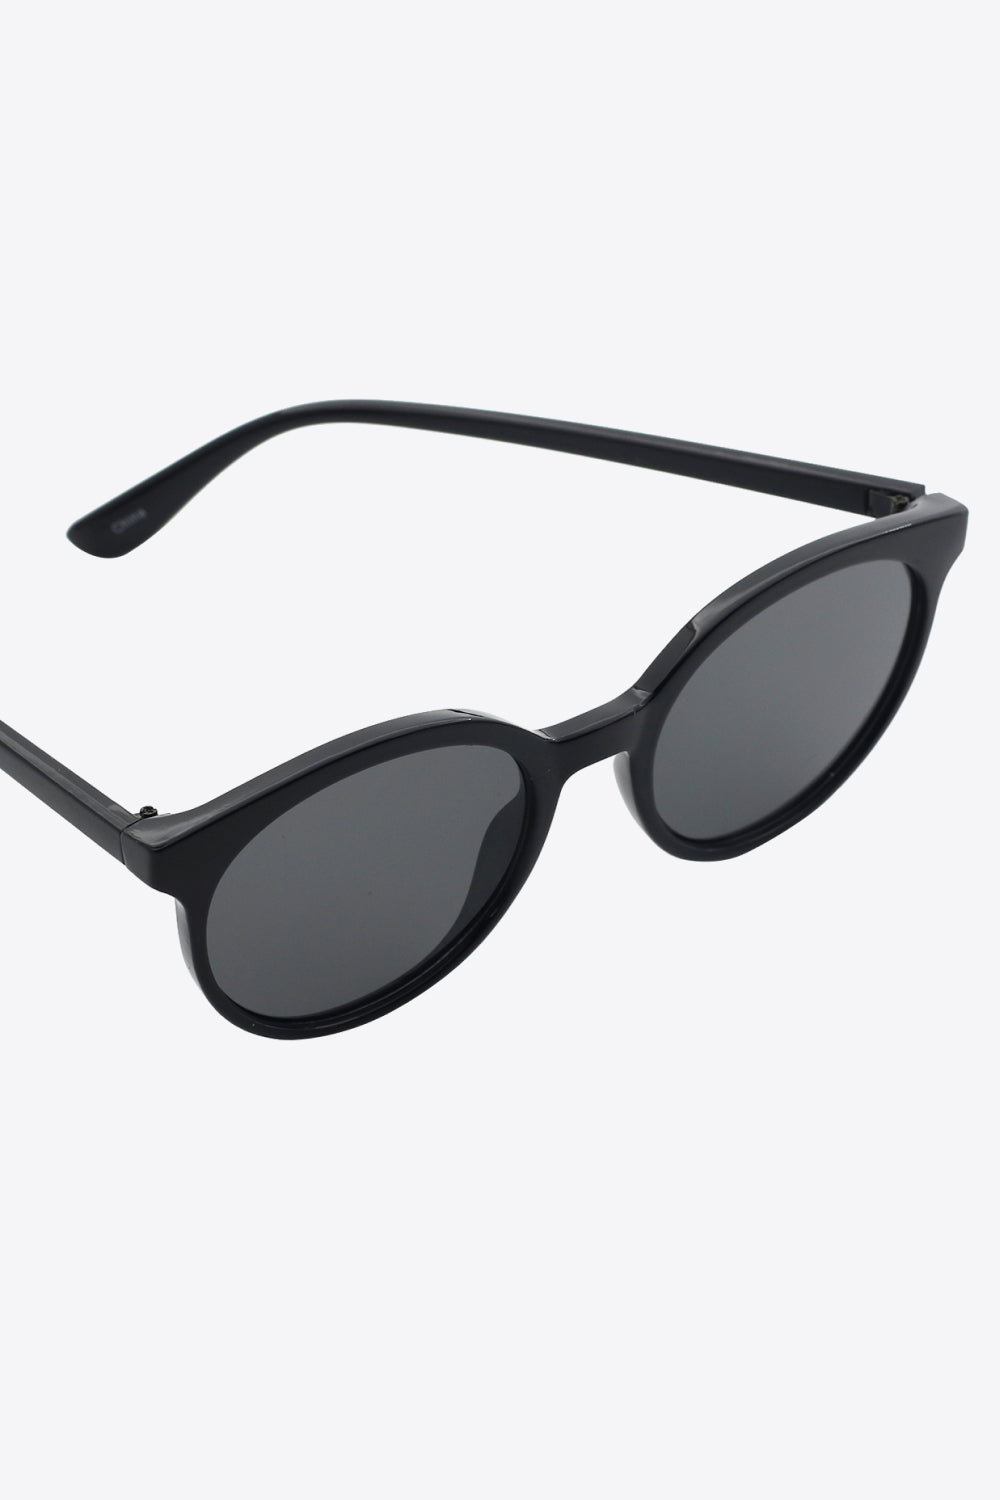 Round Full Rim Polycarbonate Frame Sunglasses - BEAUTY COSMOTICS SHOP